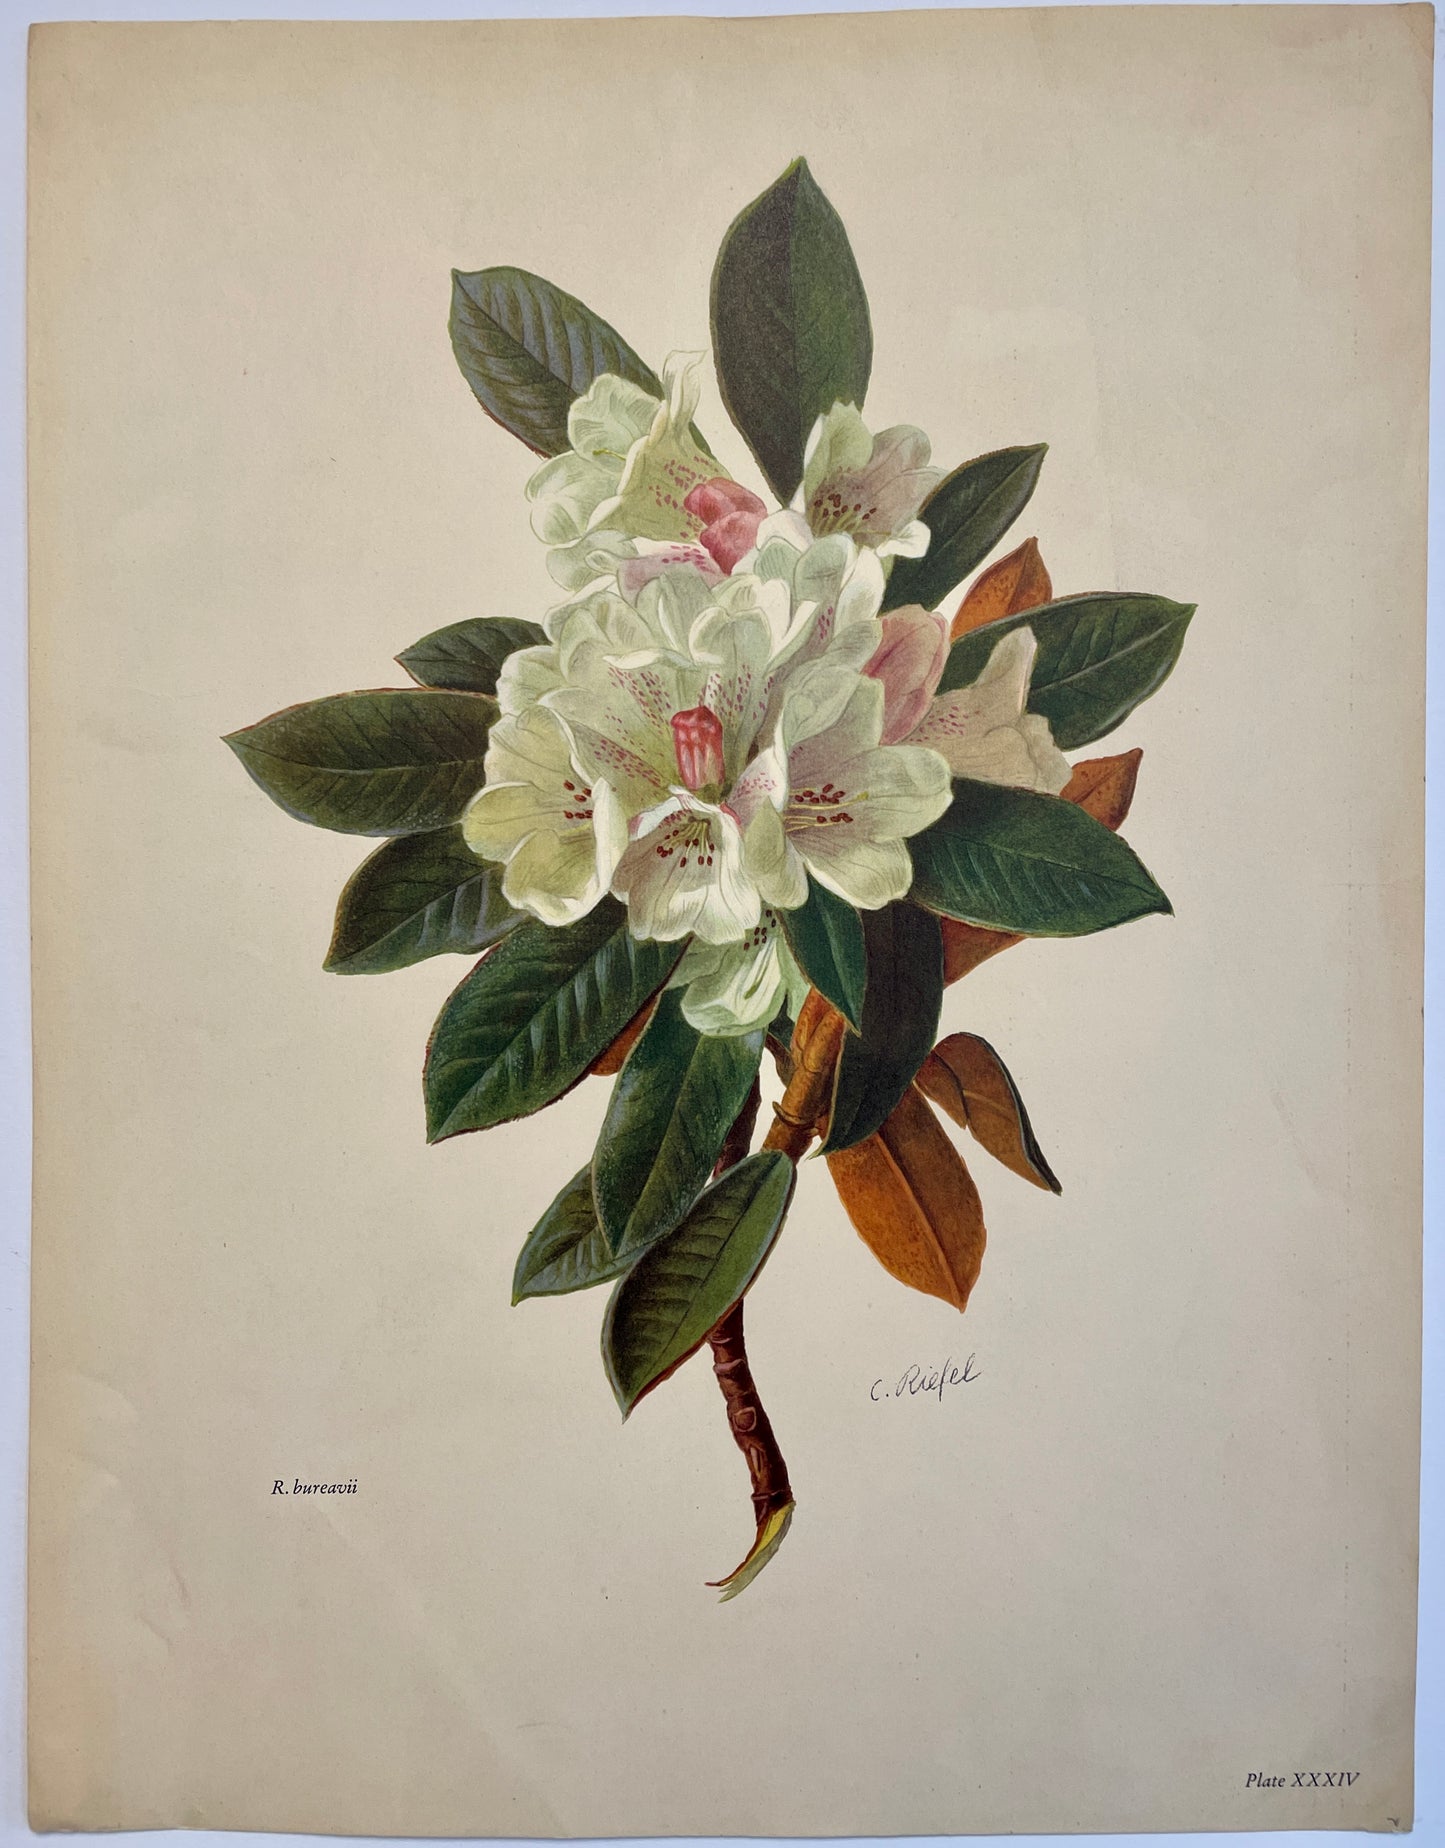 Rhododendron bureavii lithograph